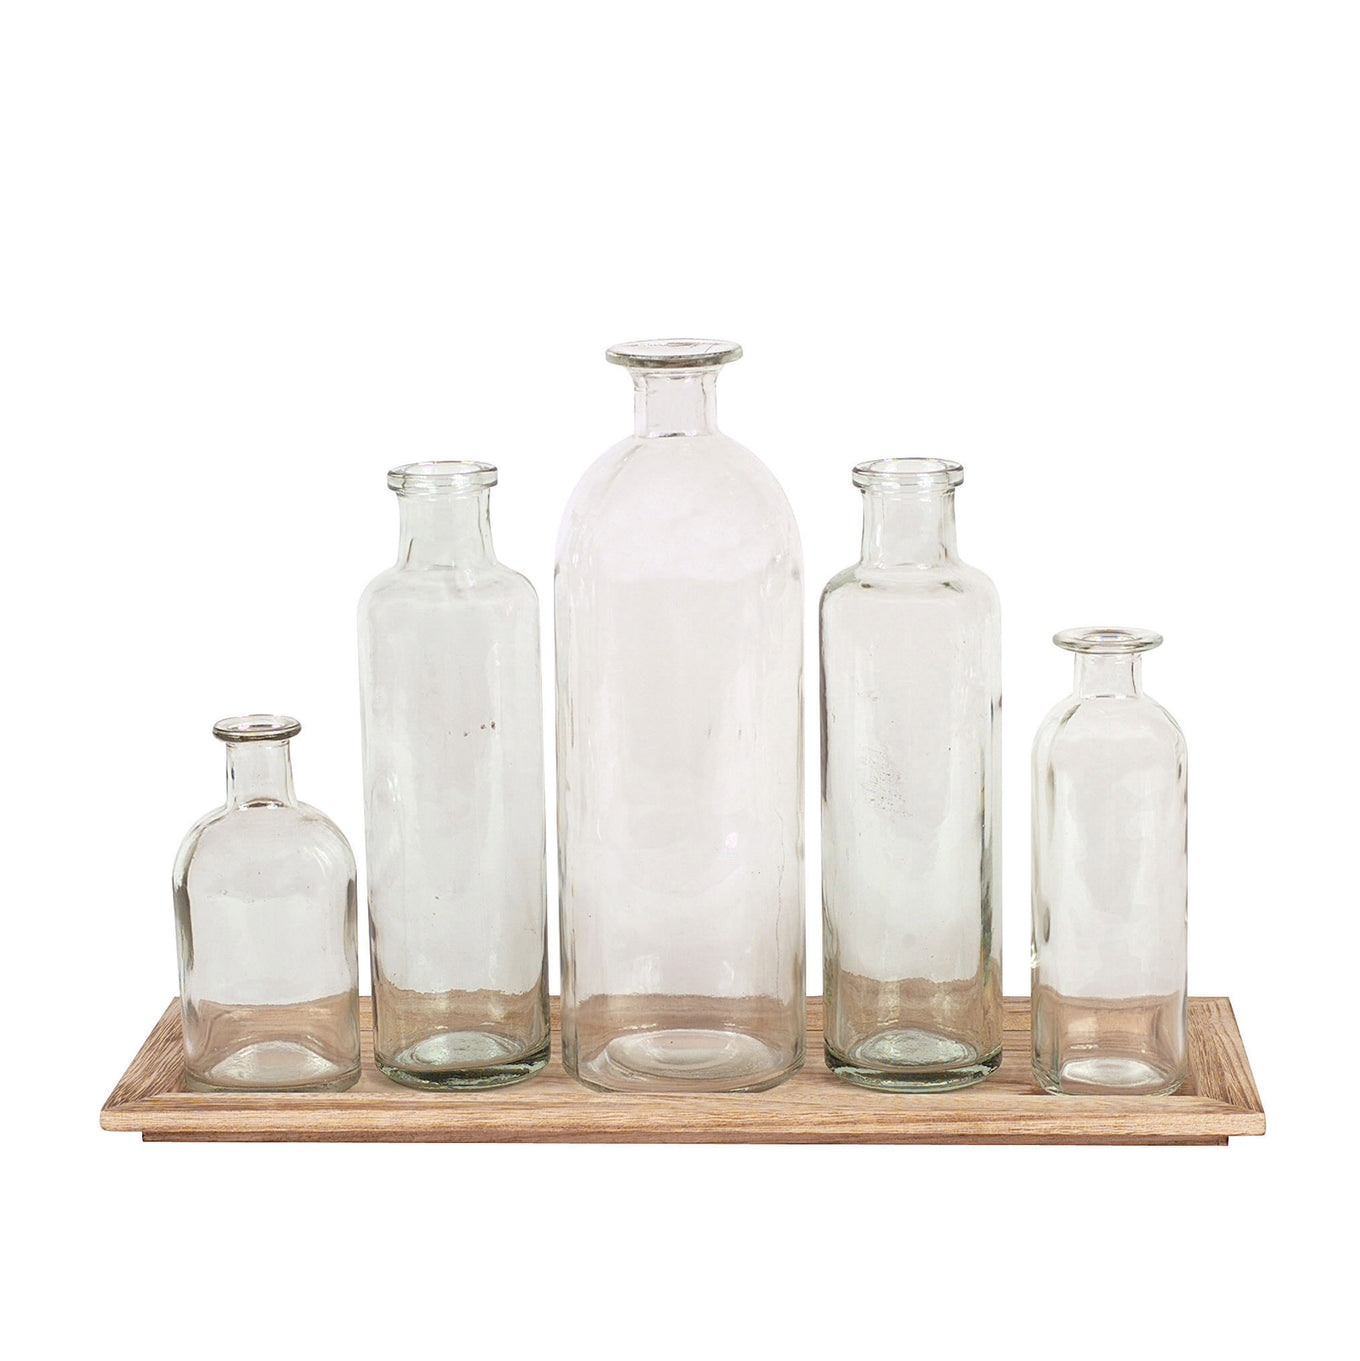 Set of 5 Vintage Bottle Vases on Wood Tray